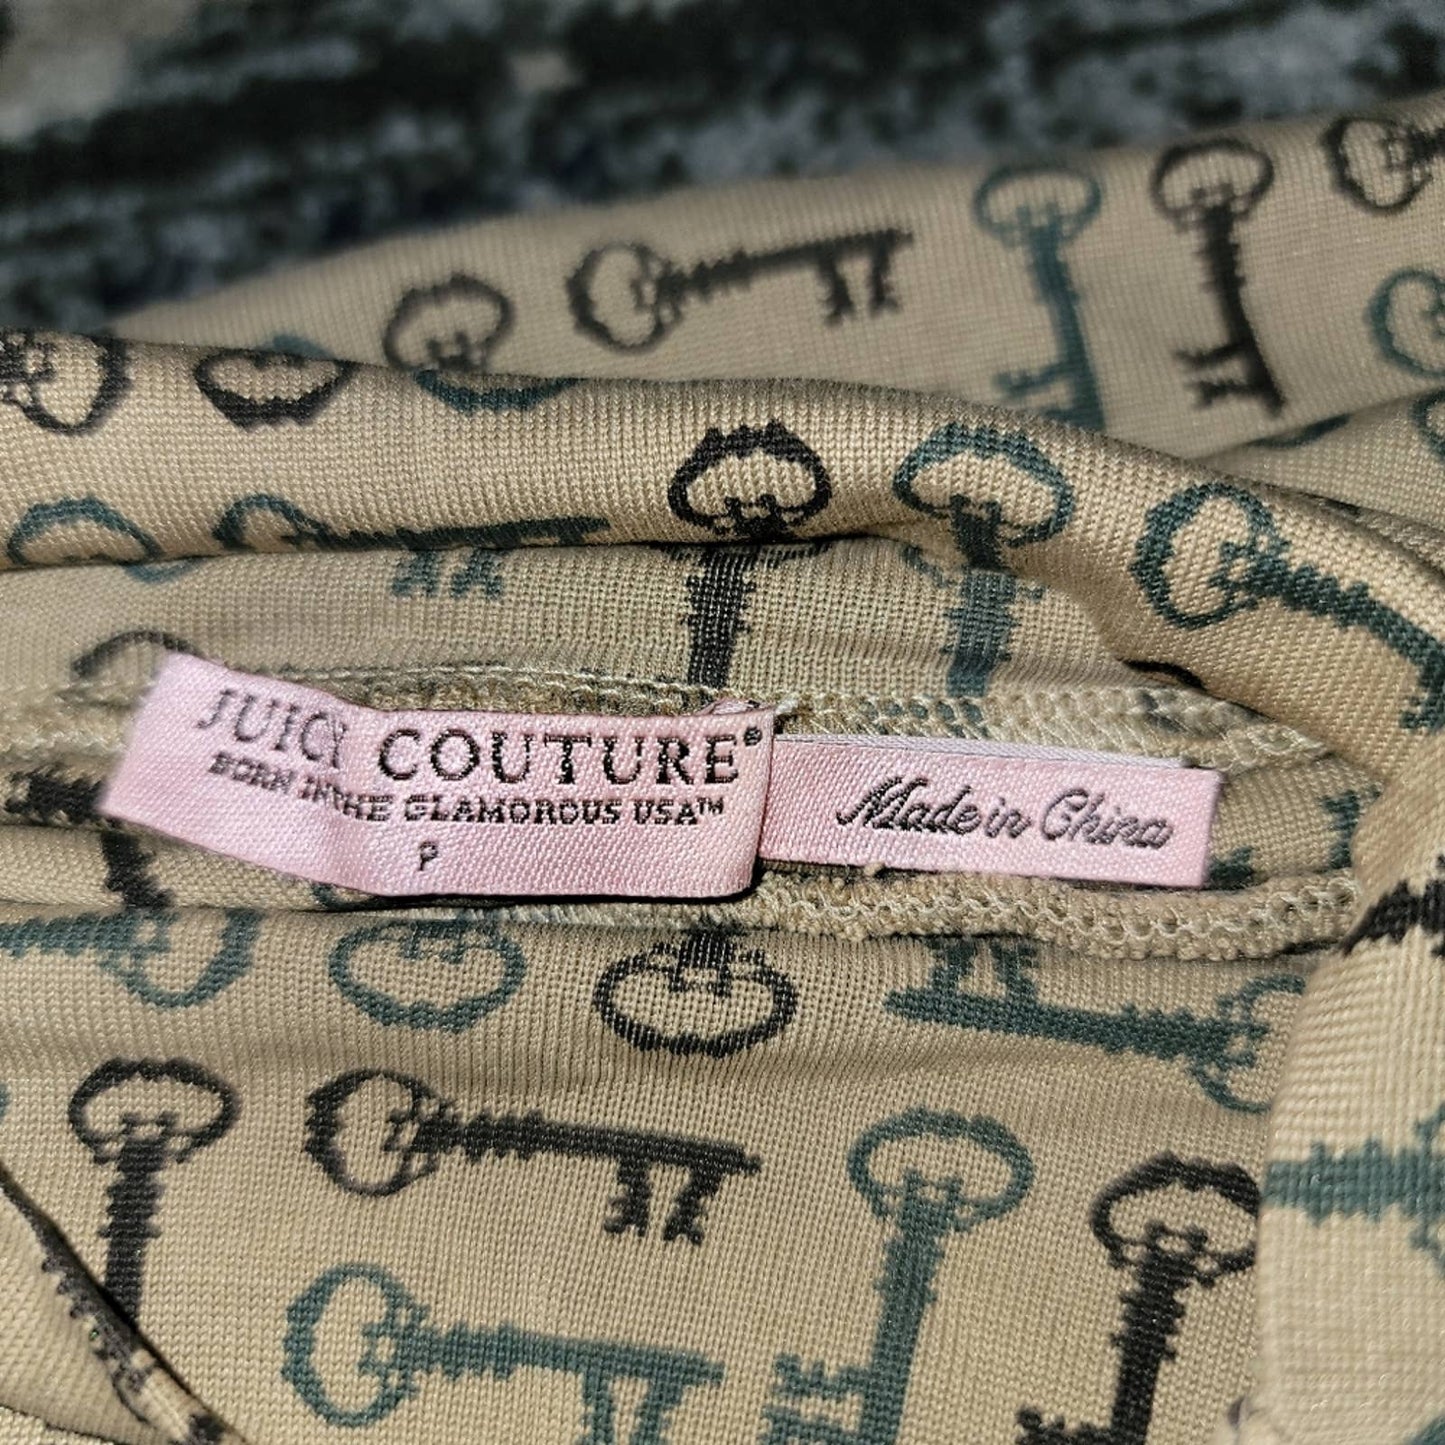 Juicy Couture Brown Silk Key Print Mock Collared Long Sleeve Mini Dress - S